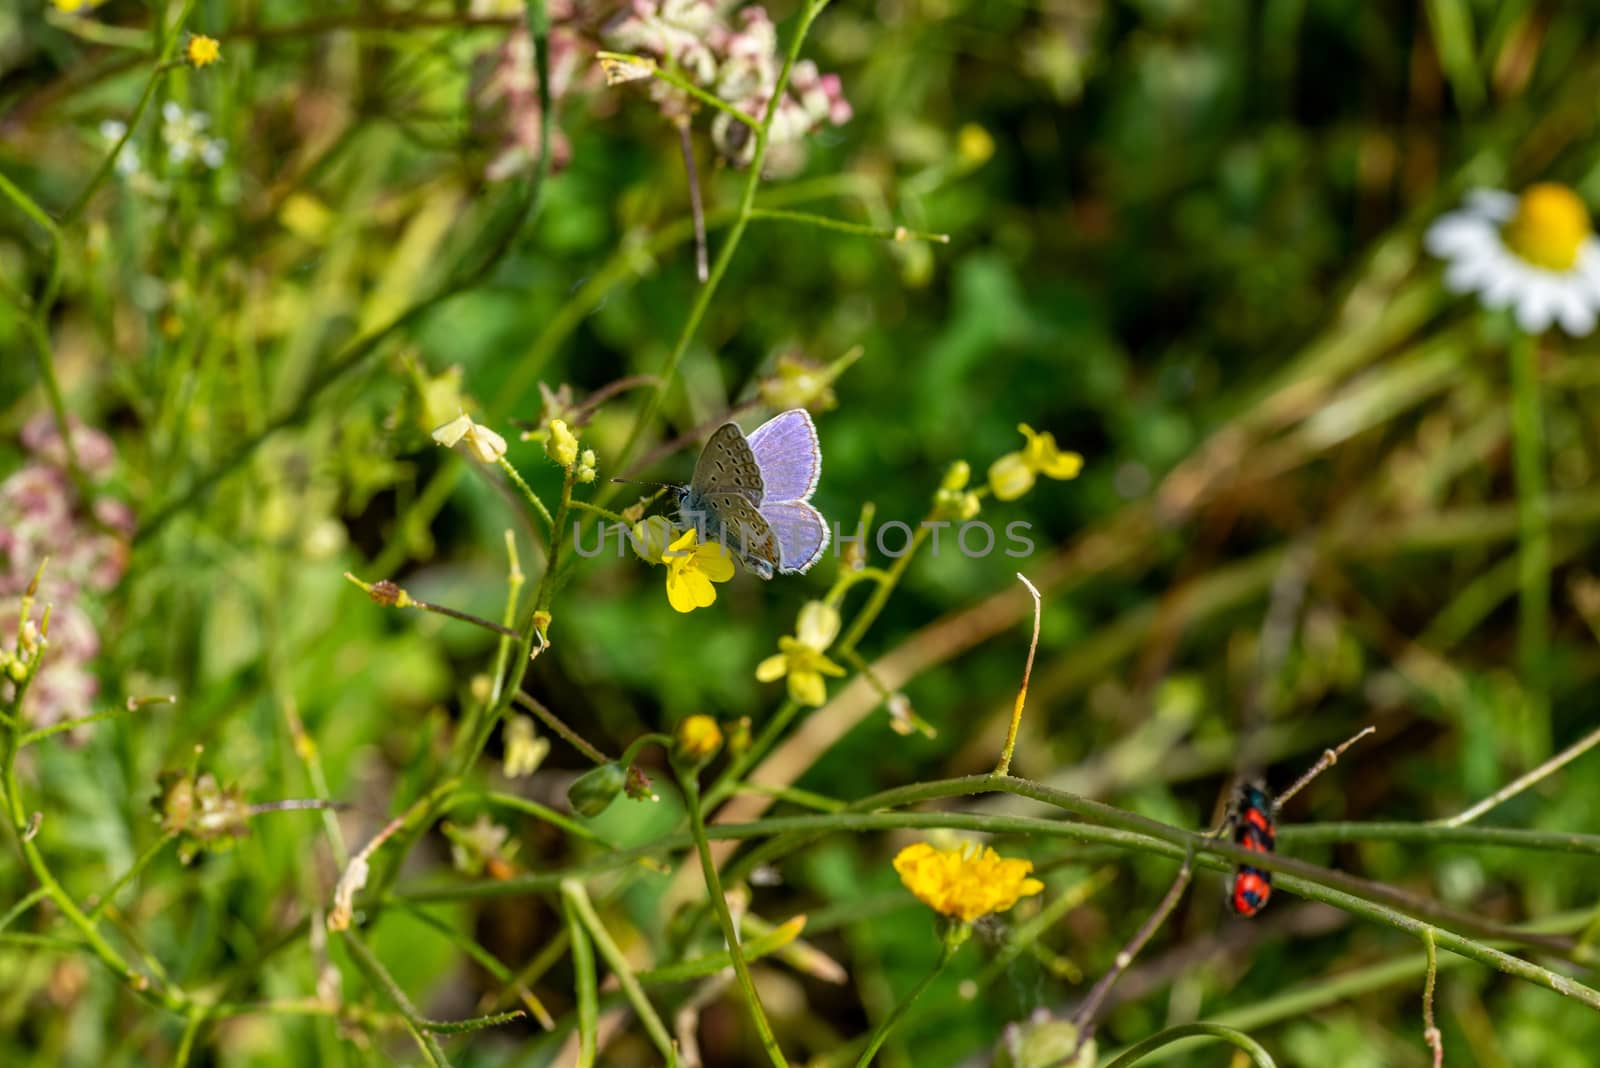 false butterfly idas on wet vegetation